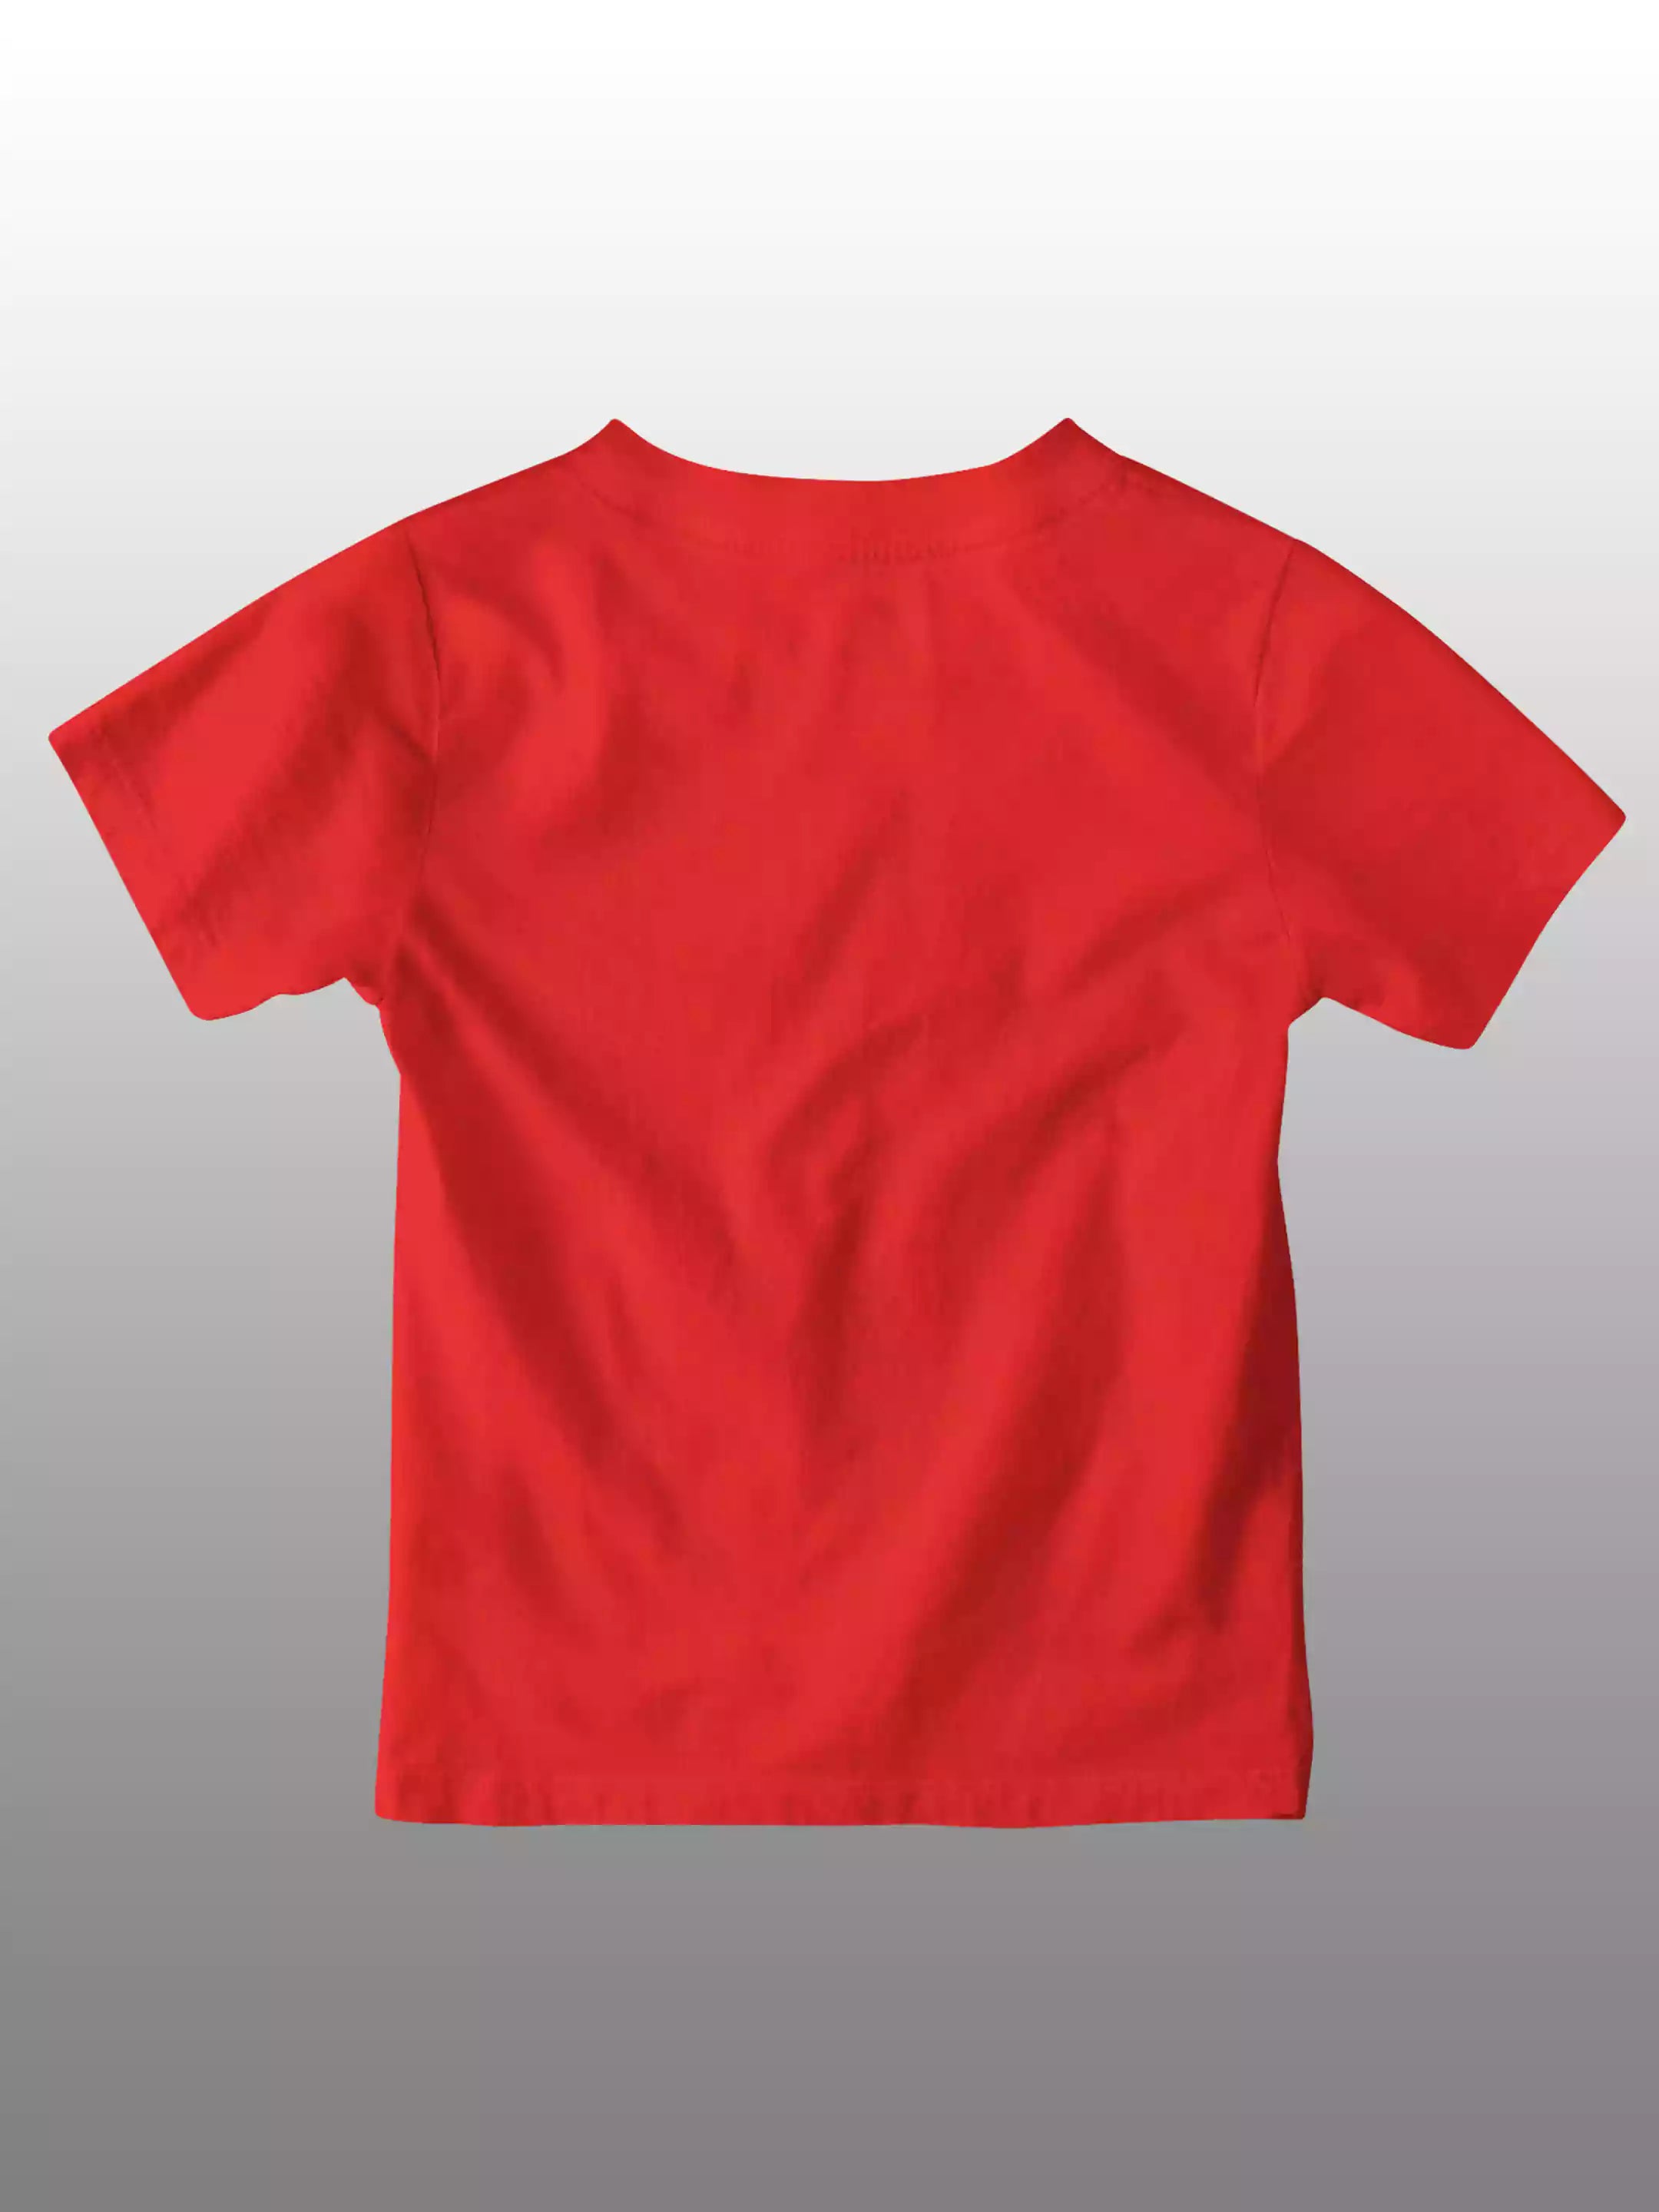 Sanskar Aahet RED - Sukhiaatma Unisex Graphic Printed Kids T-shirt